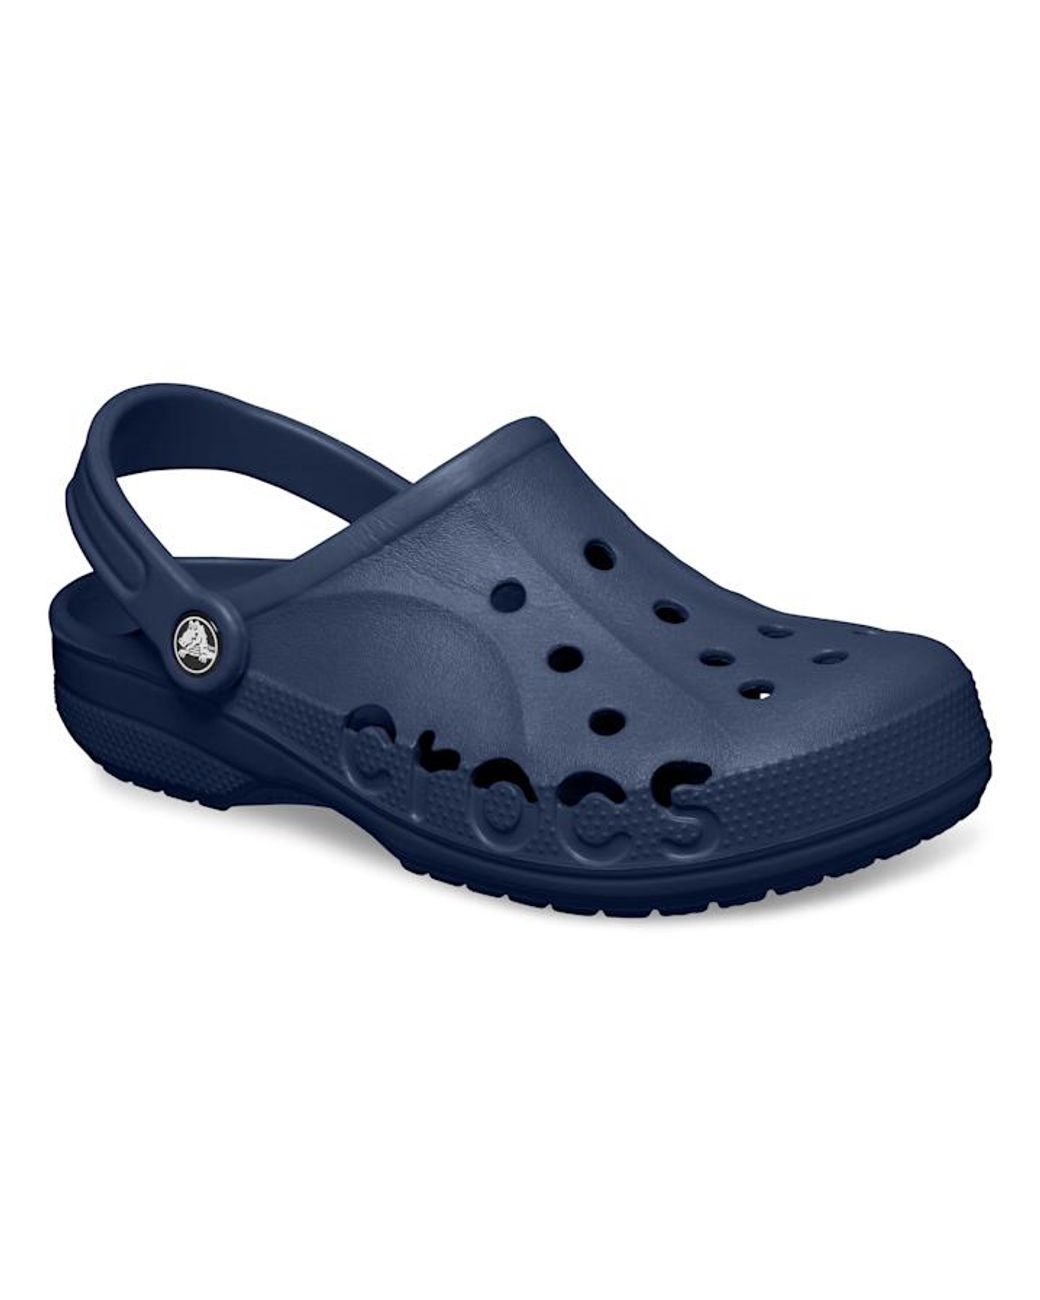 Womens Crocs Baya Cerulean Blue Roomy Fit Ladies Sandals 